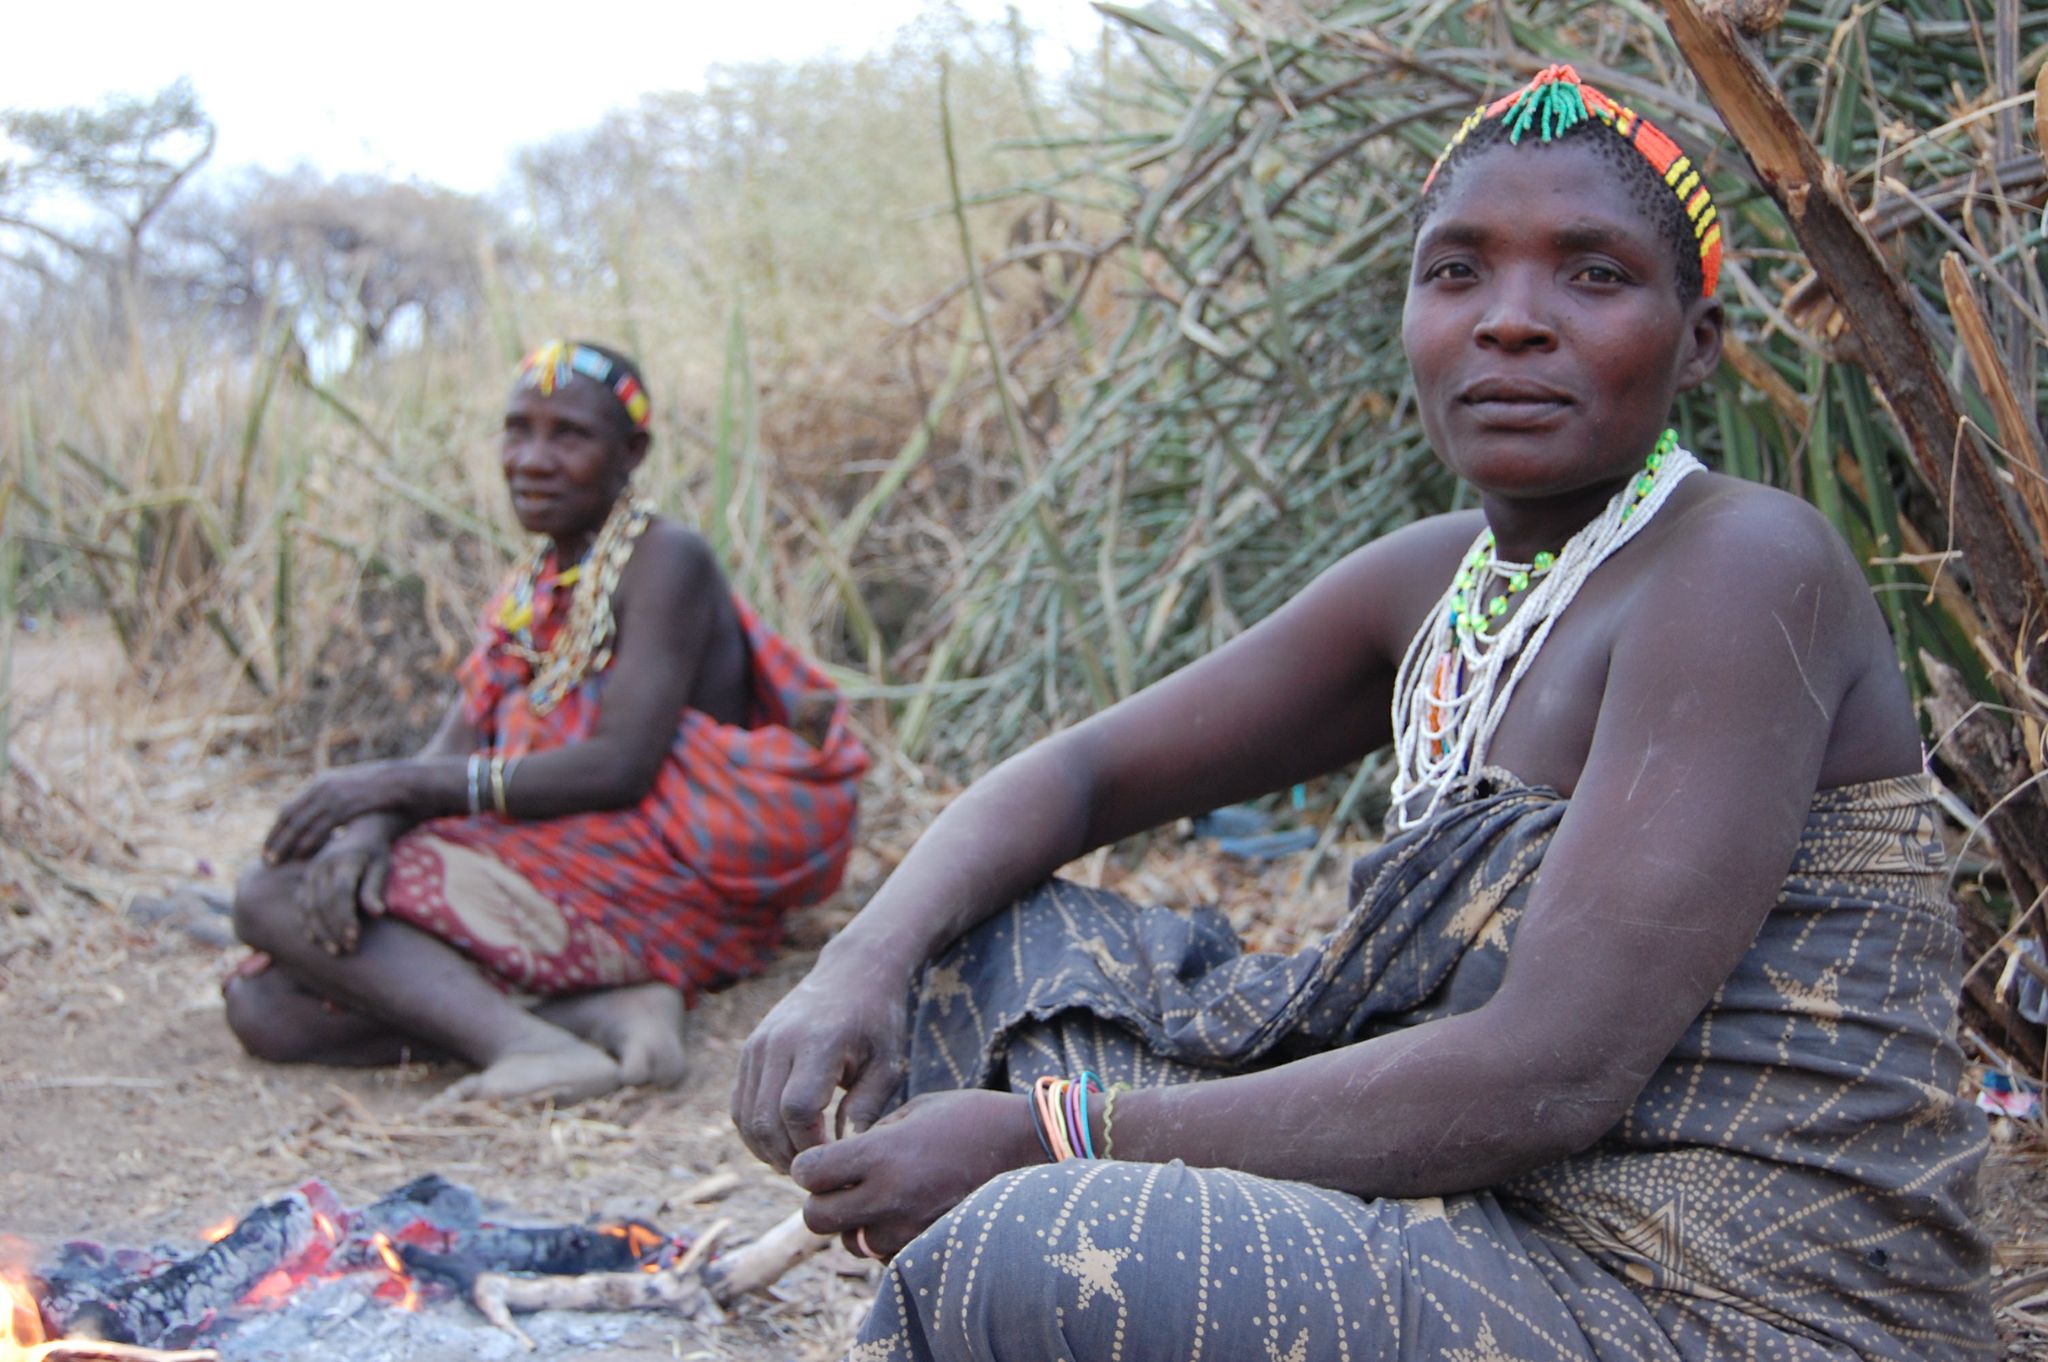 Hunter gatherer in Tanzania